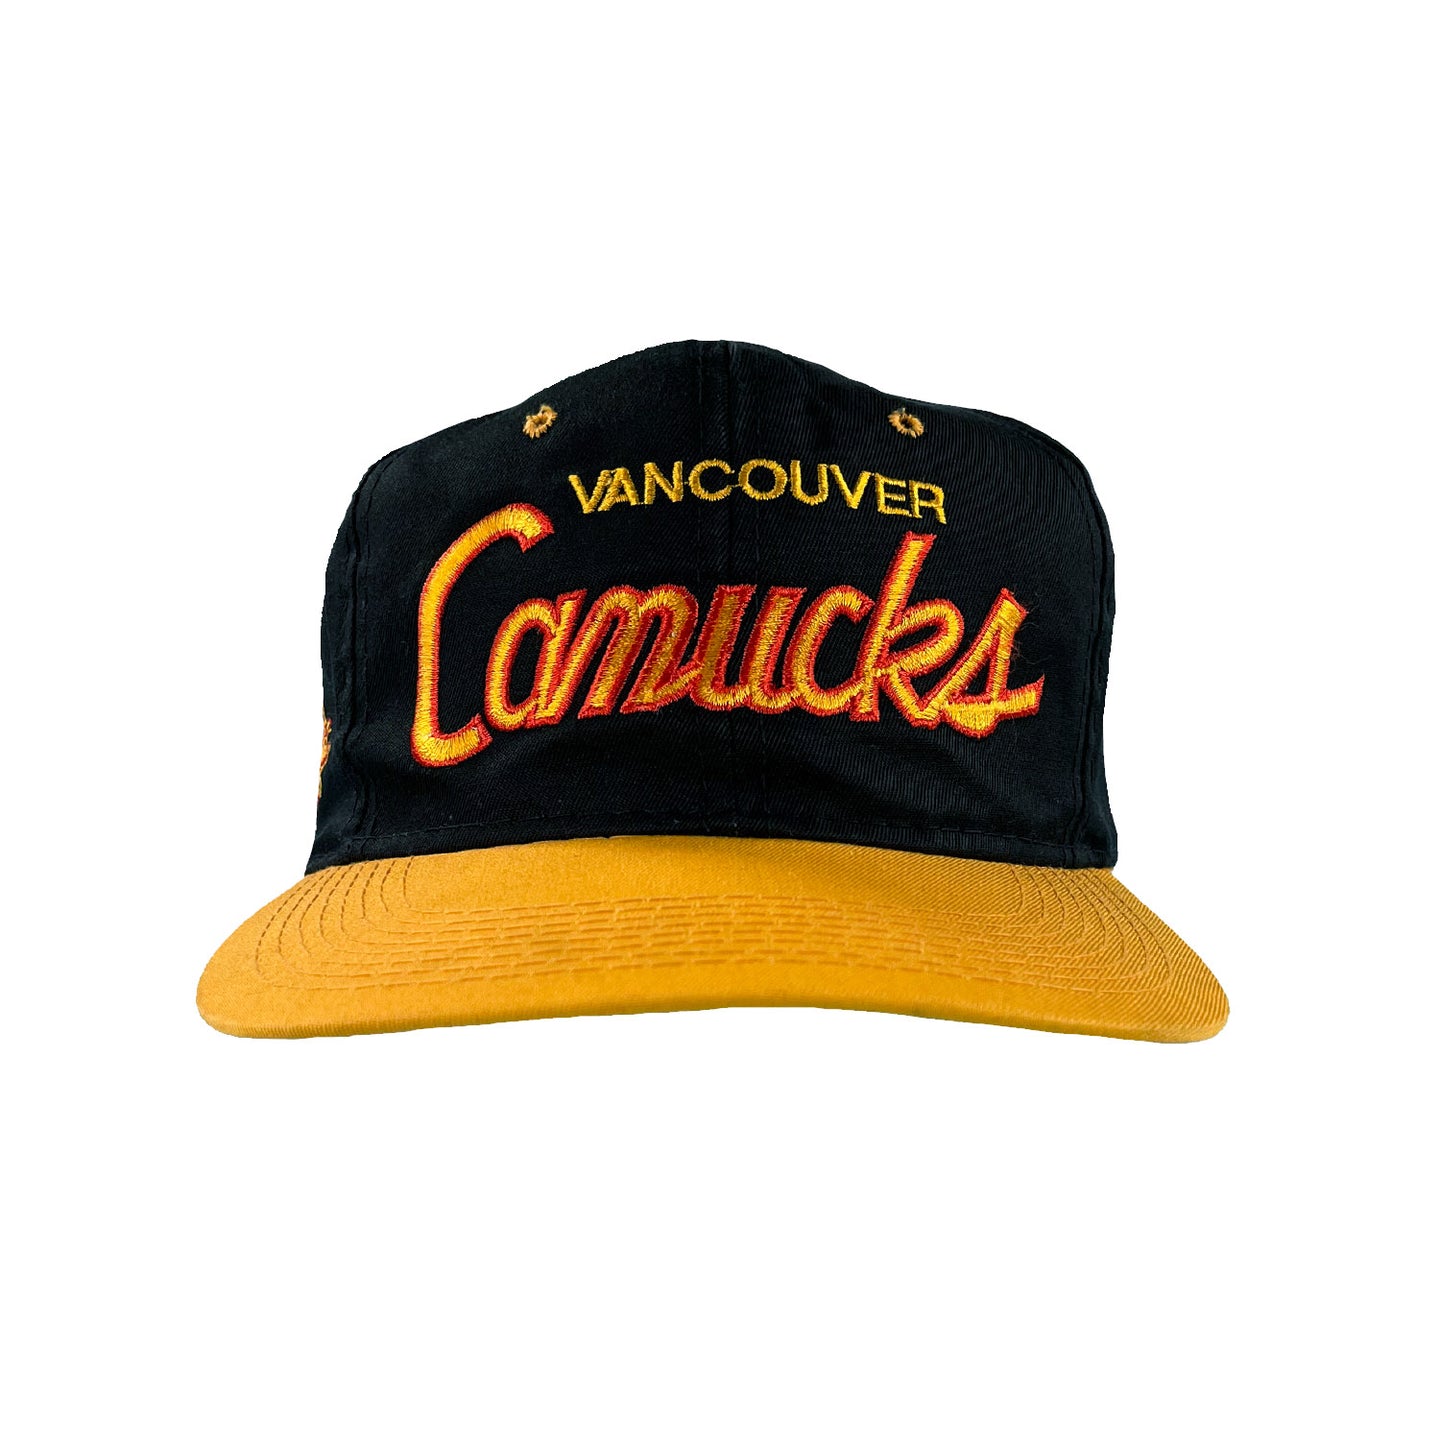 Vancouver Canucks Sports Specialties script snapback